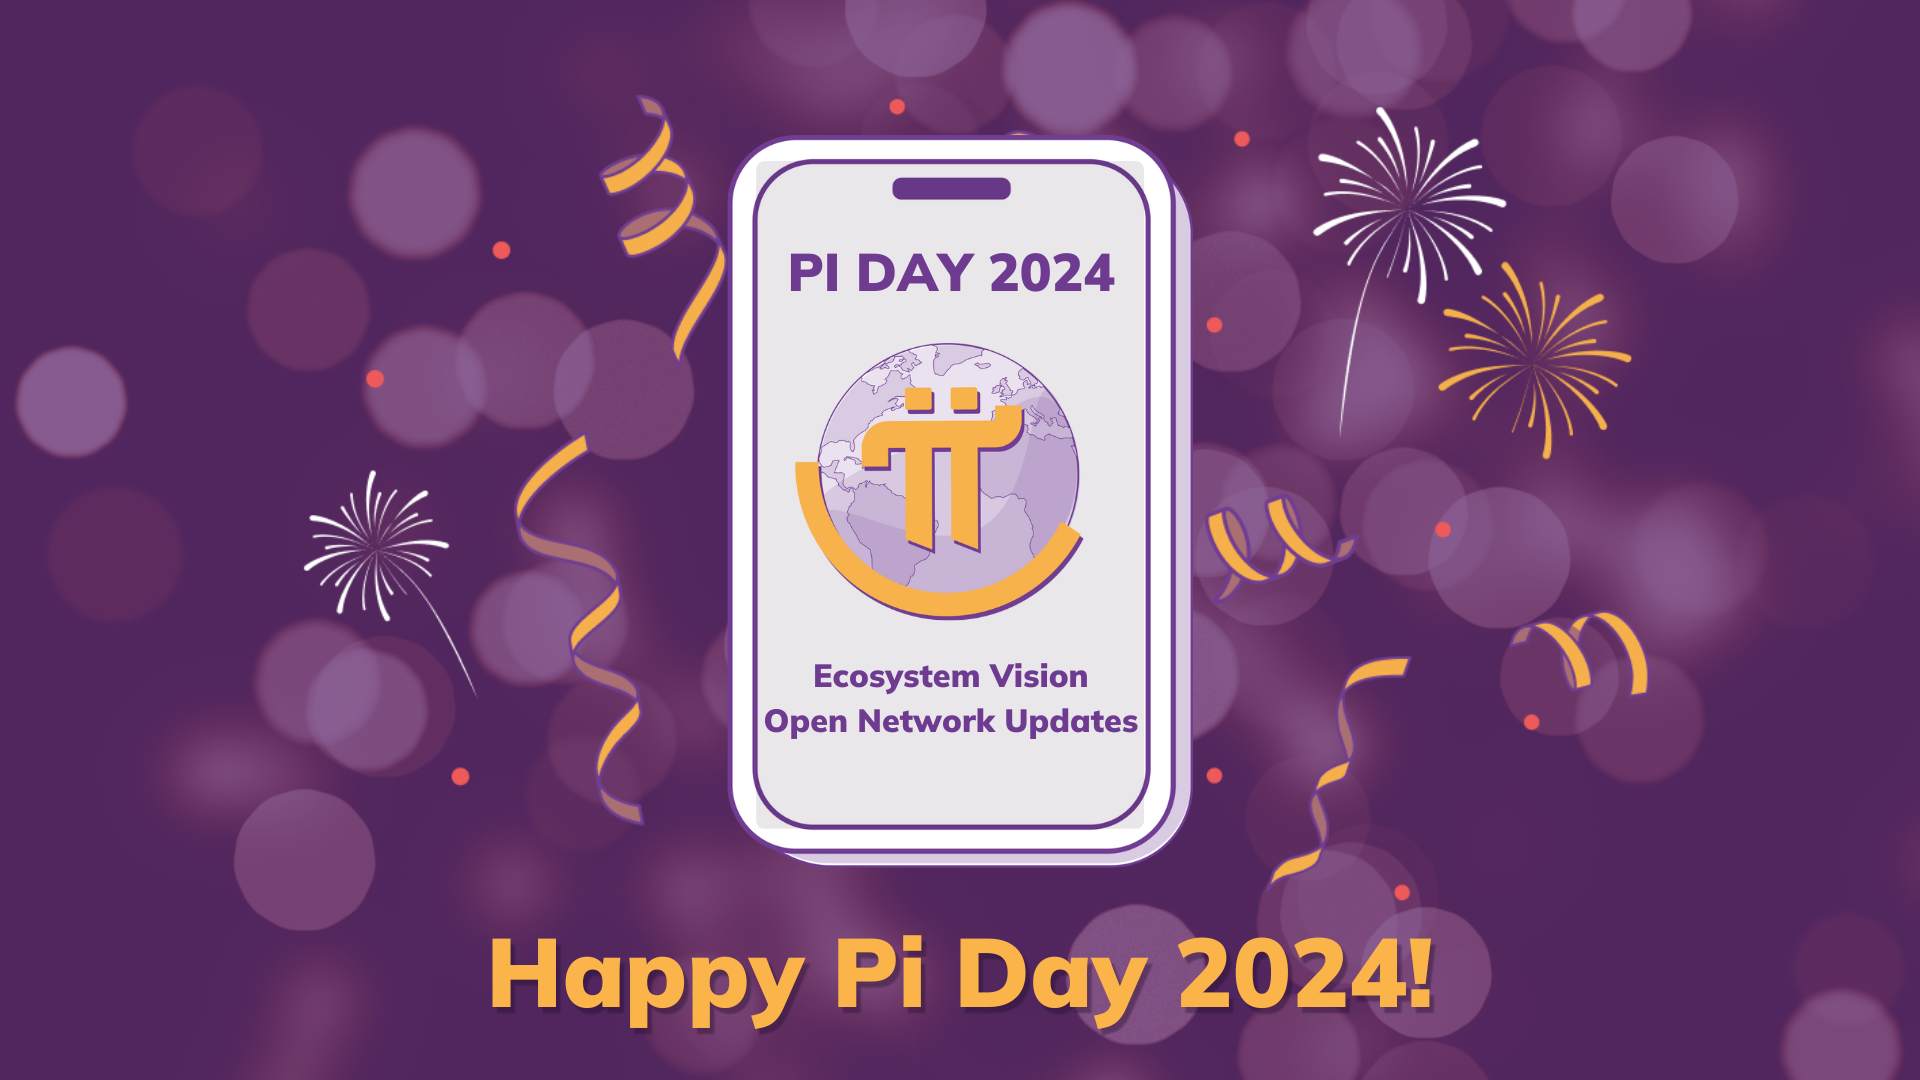 Pi Day 2024